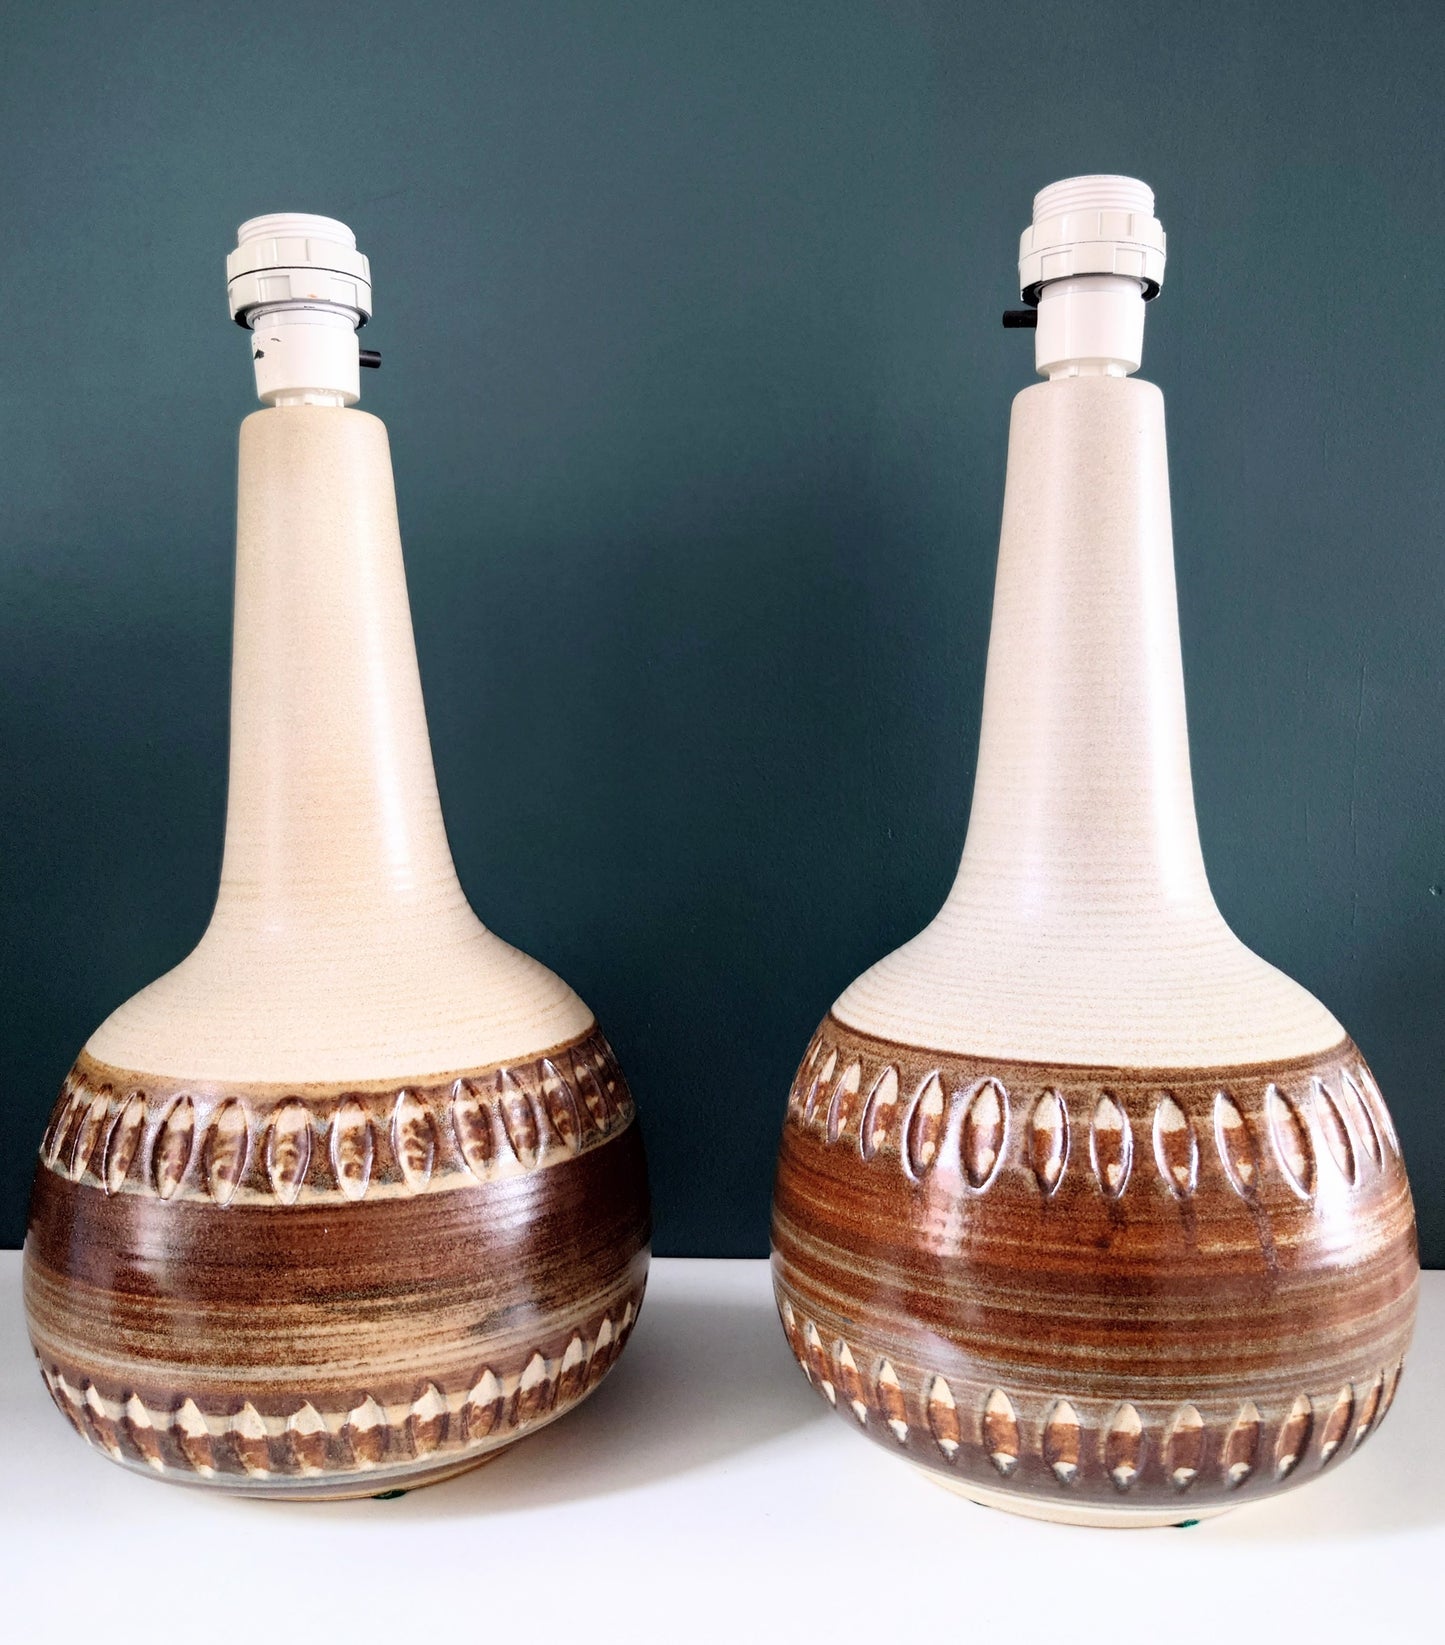 HUGE Soholm Danish Ceramic Table Lamp Neutral Colours 1960s Retro Scandi Pottery 1070